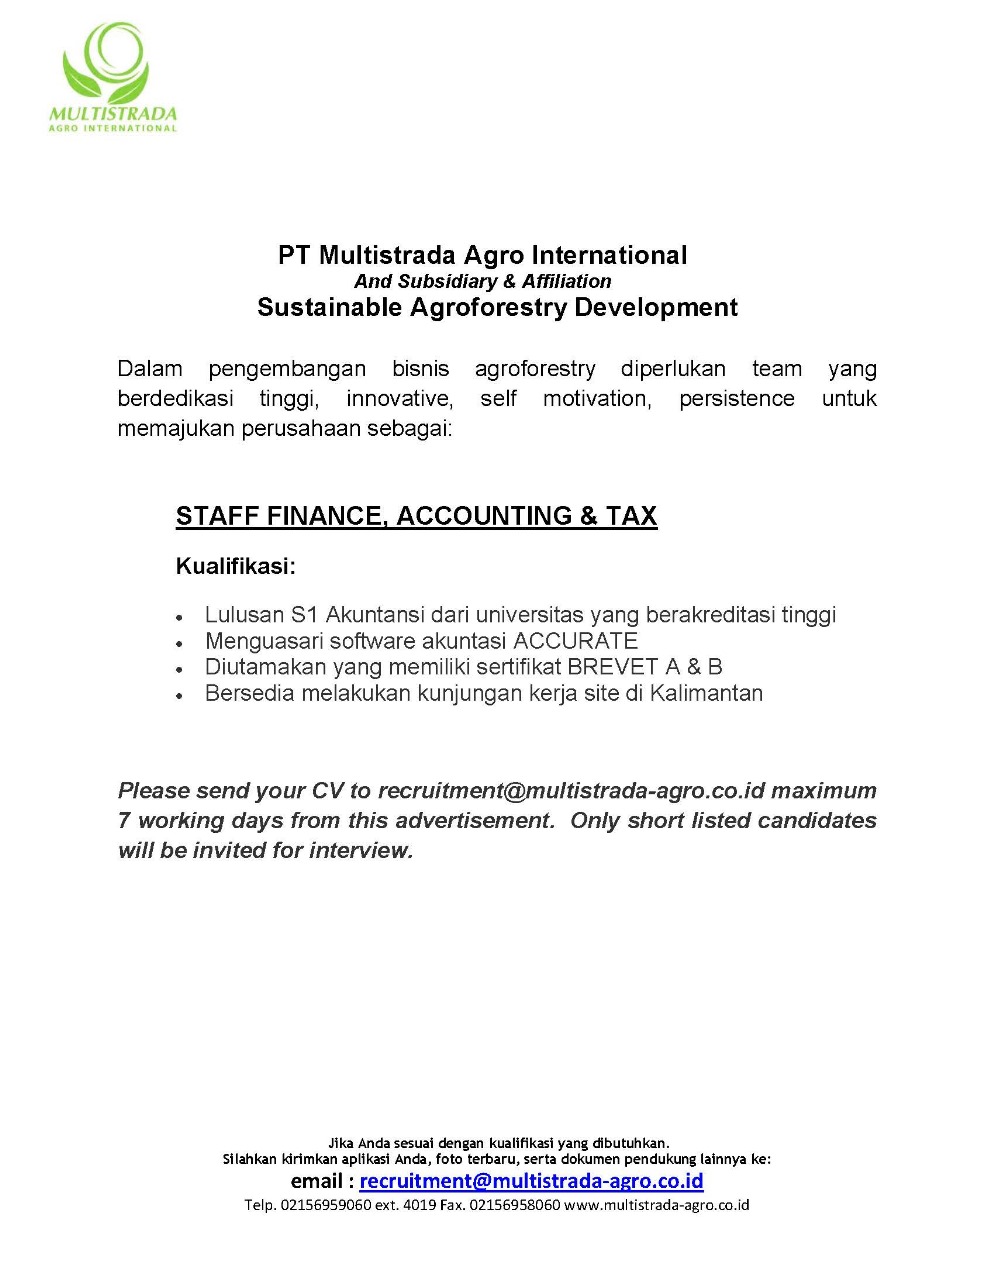 Job Opportunity - PT. Multistrada Agro International